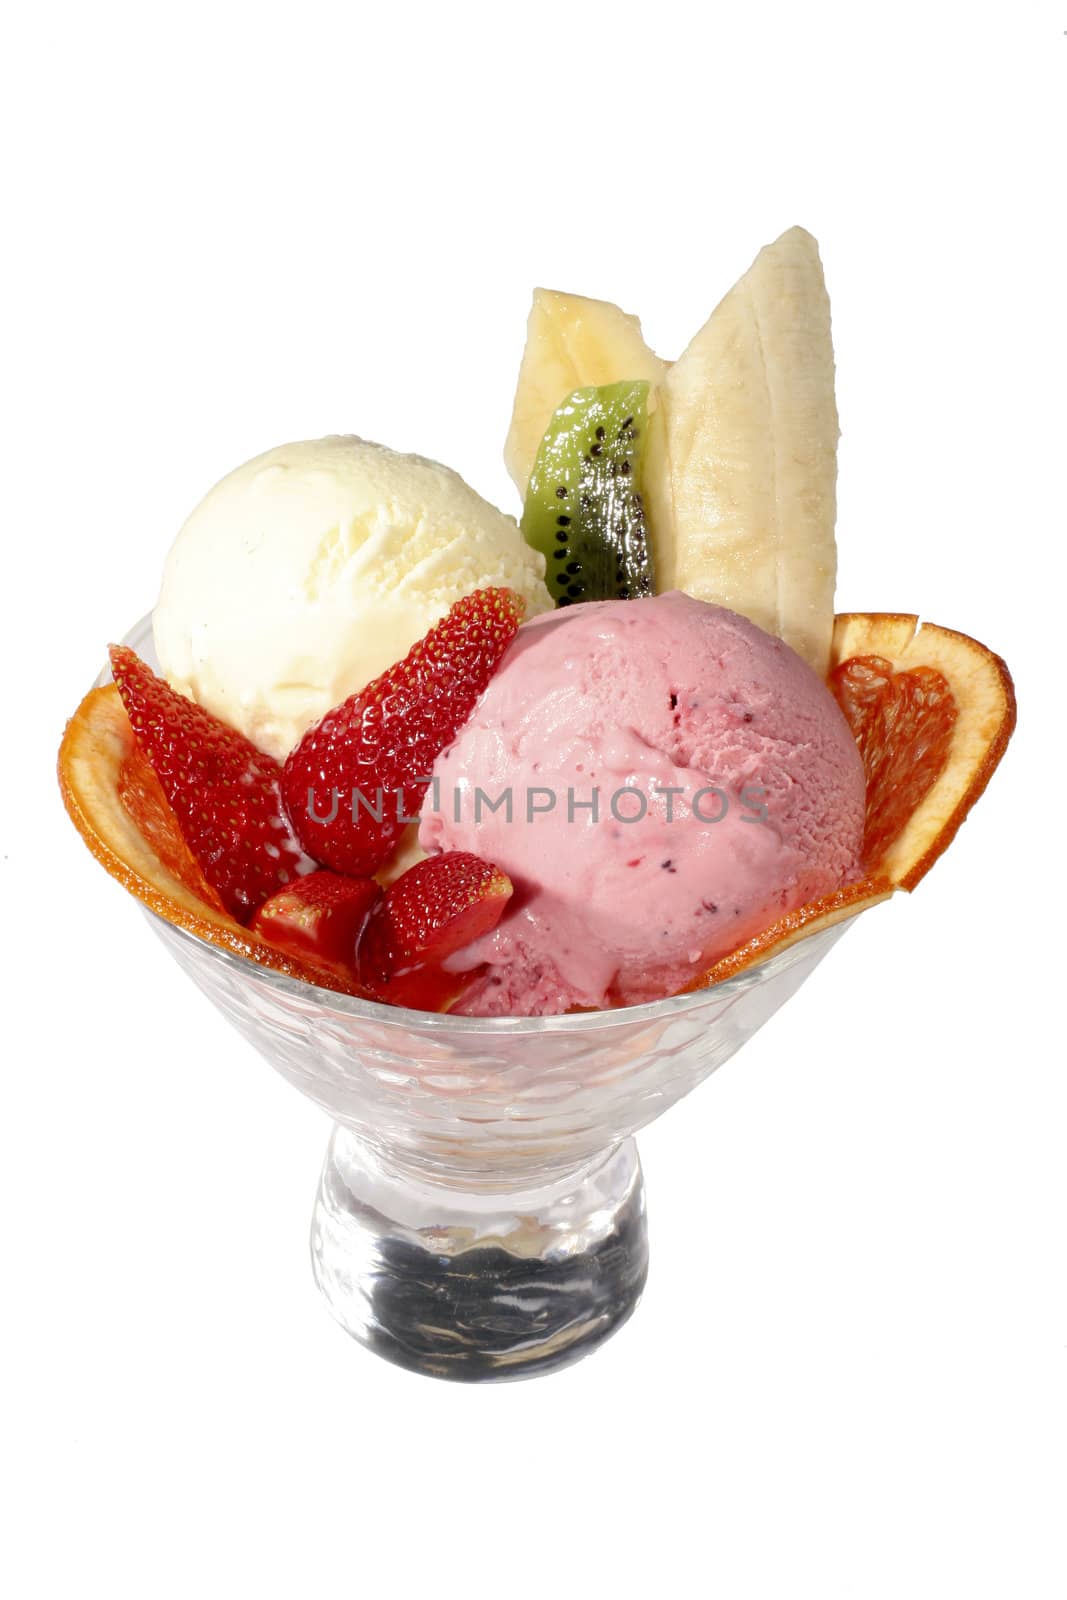 dessert with fruits and vanila icecream